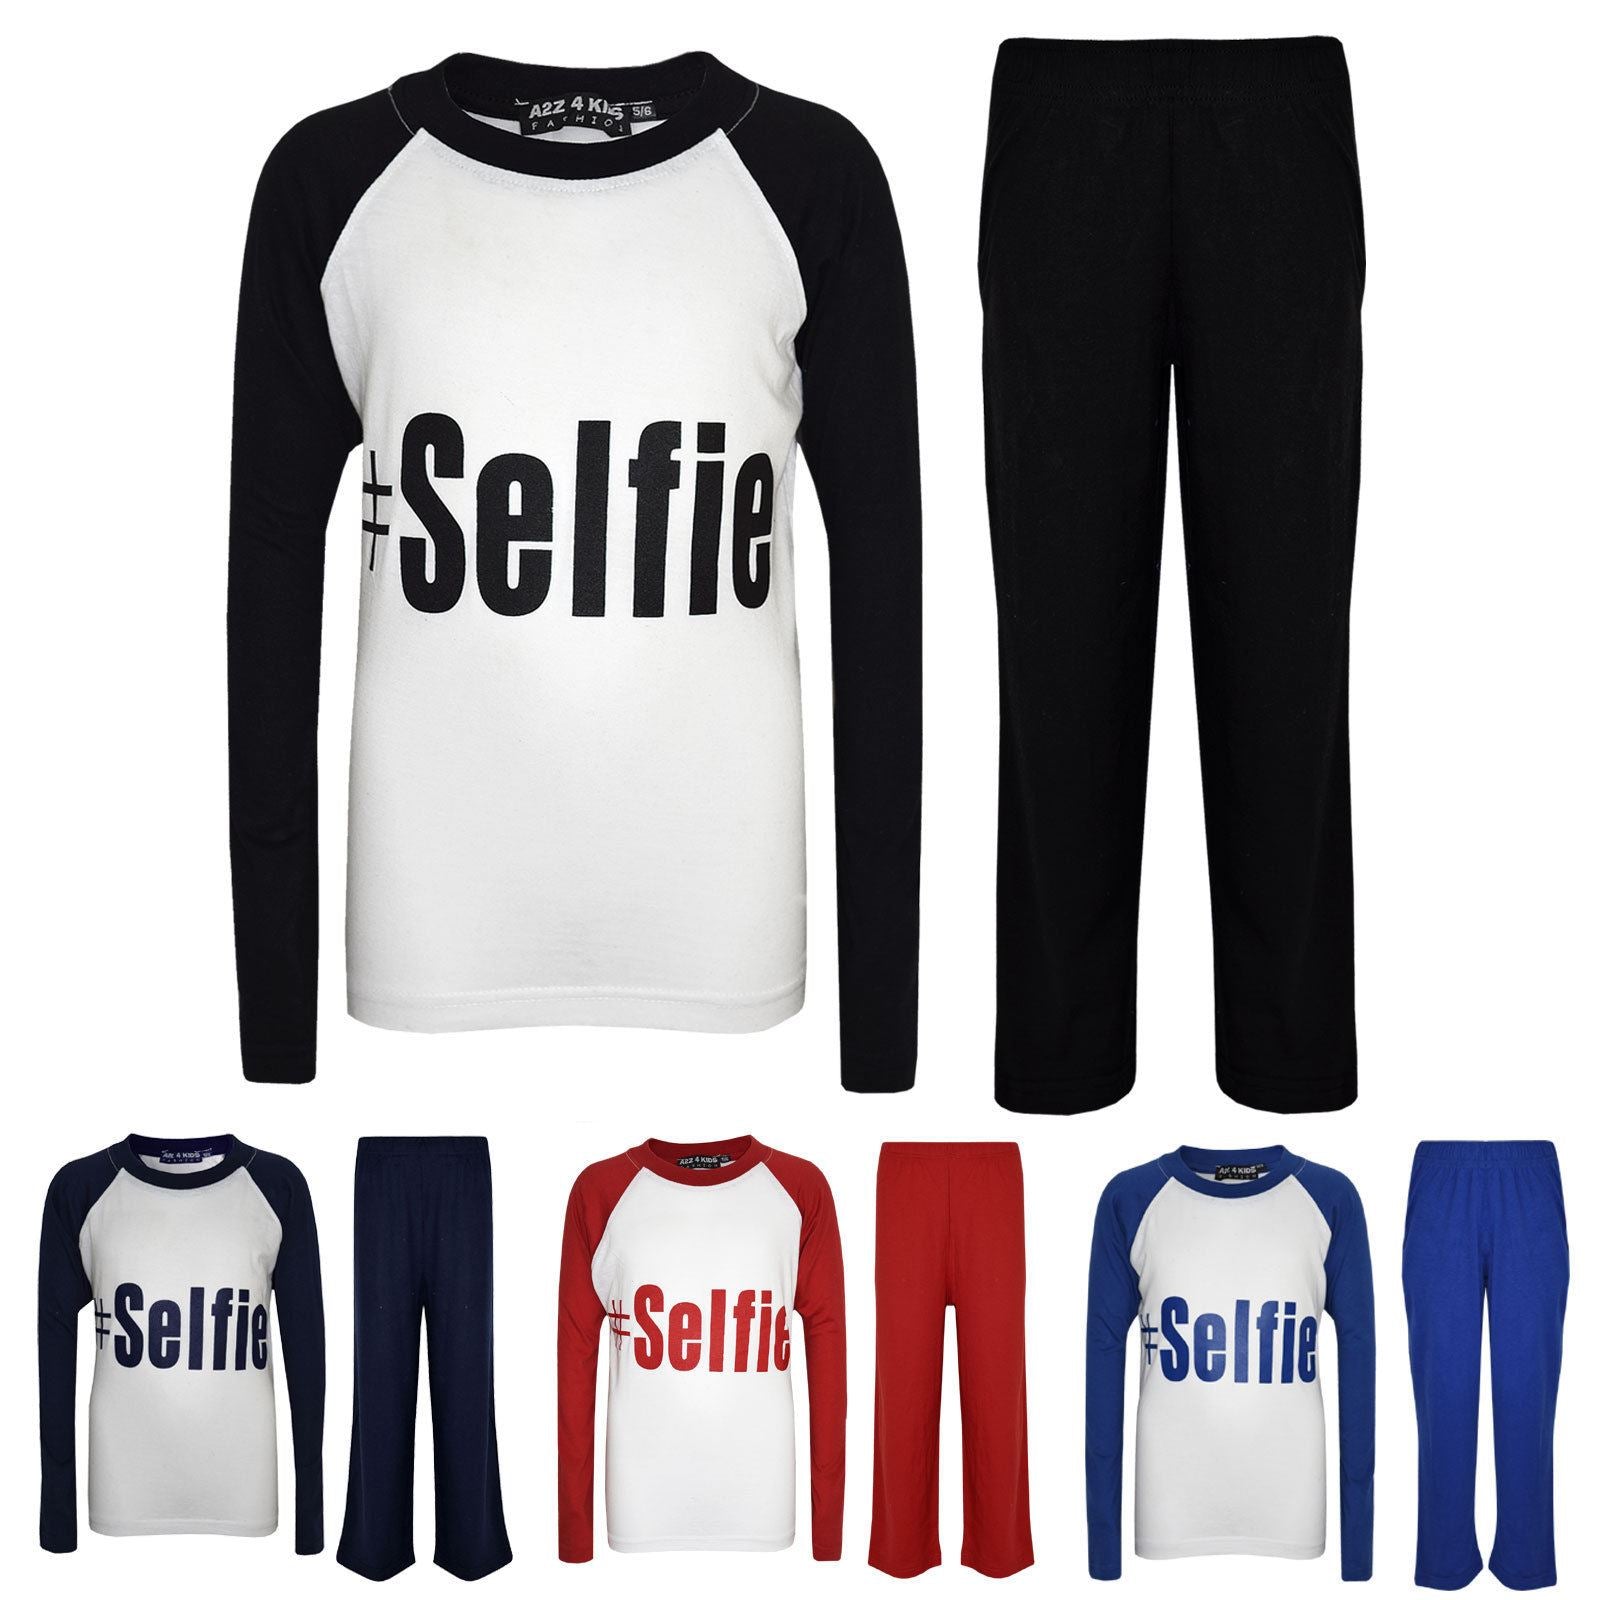 Kids Girls Boys PJ's " #SELFIE " Printed Stylish Pyjamas New Age 5-13 Years